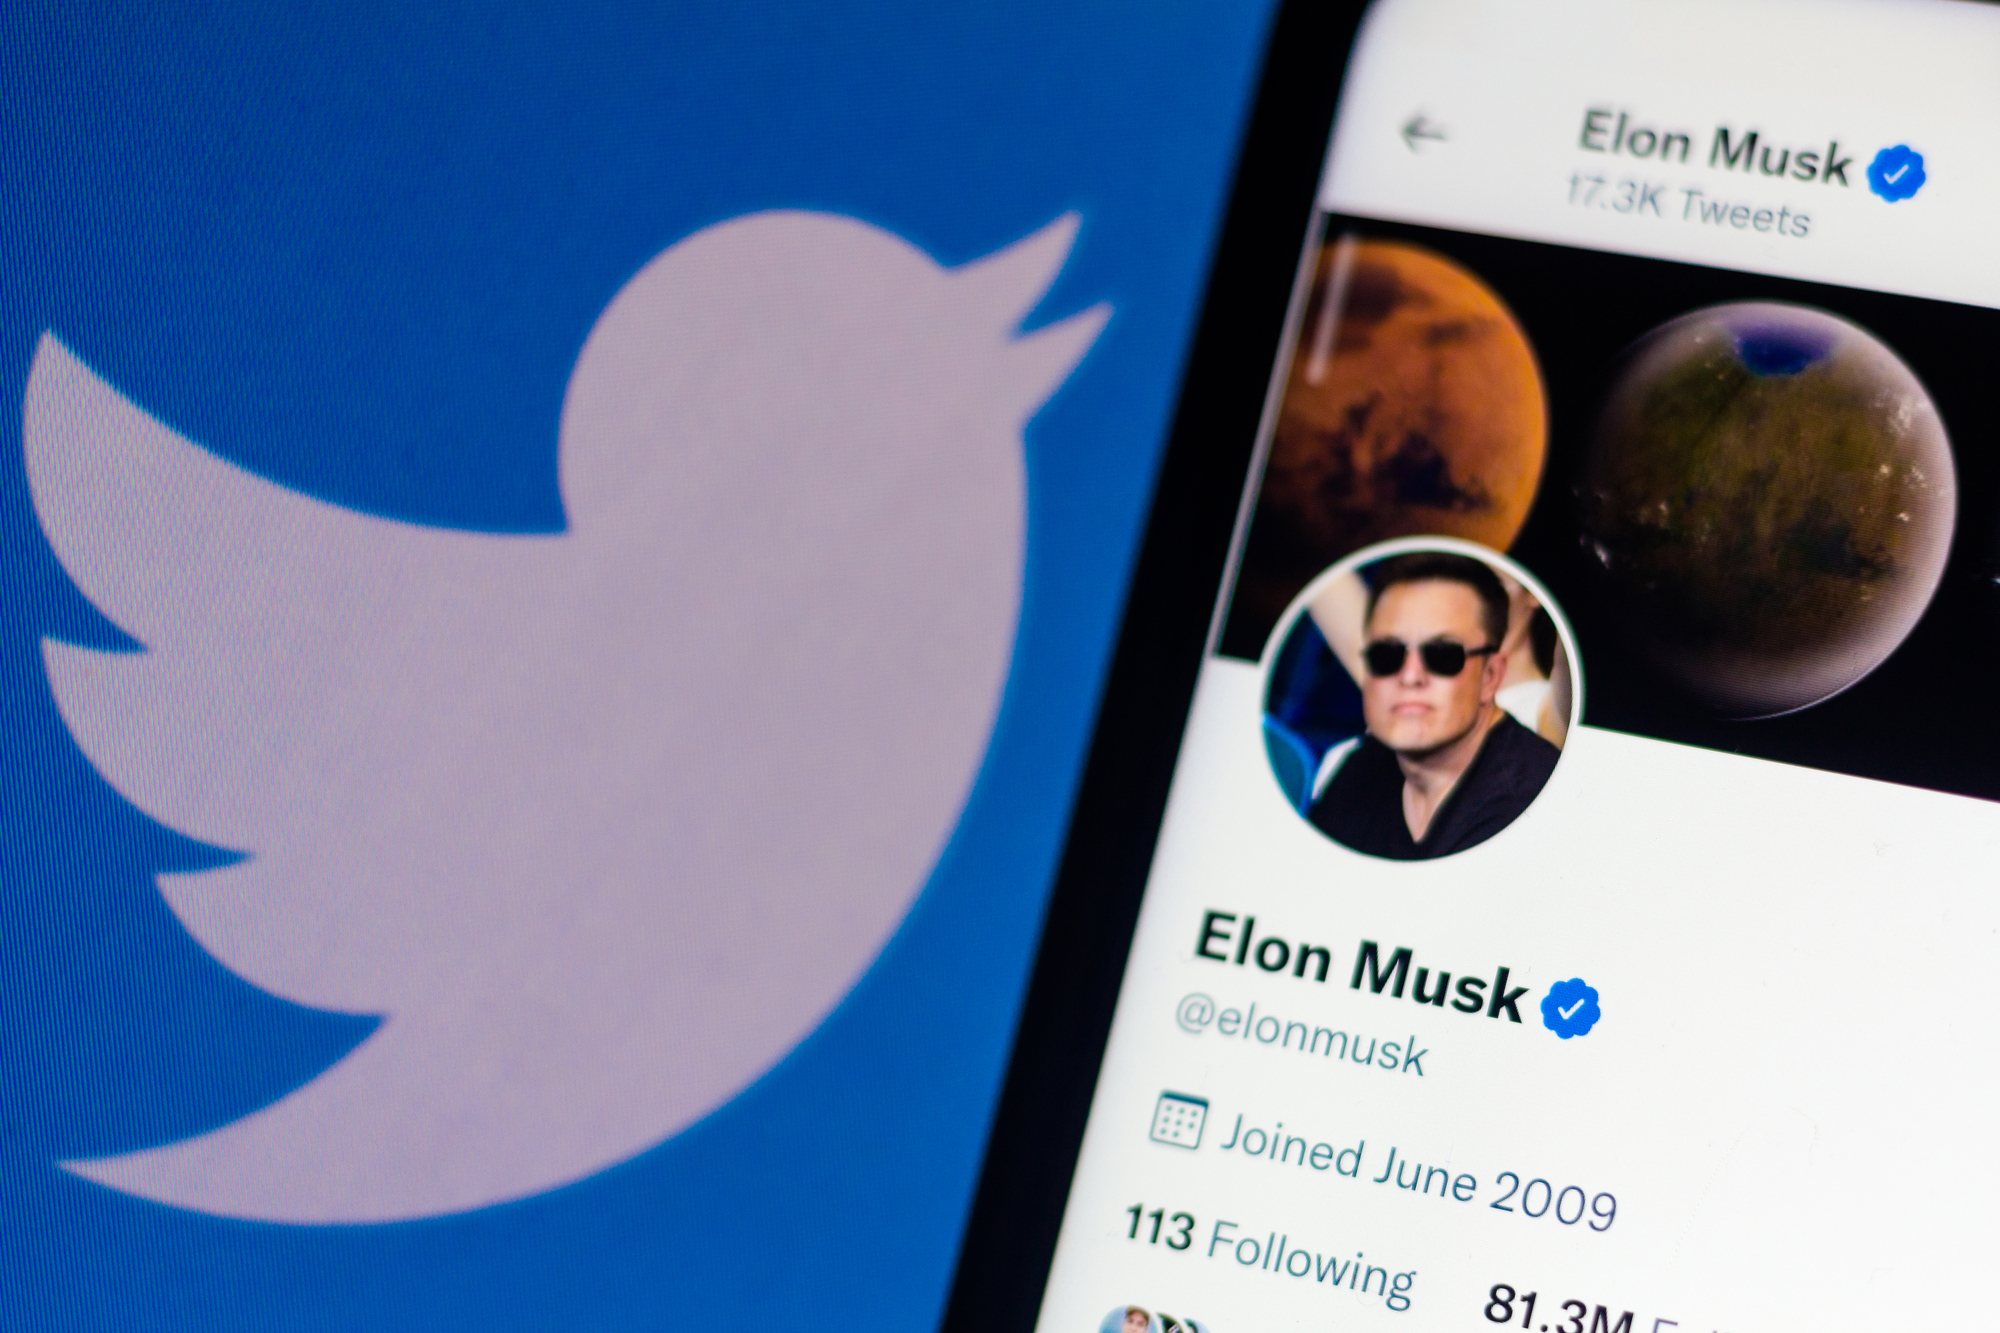 Pending any plot twists, Elon Musk will soon own Twitter